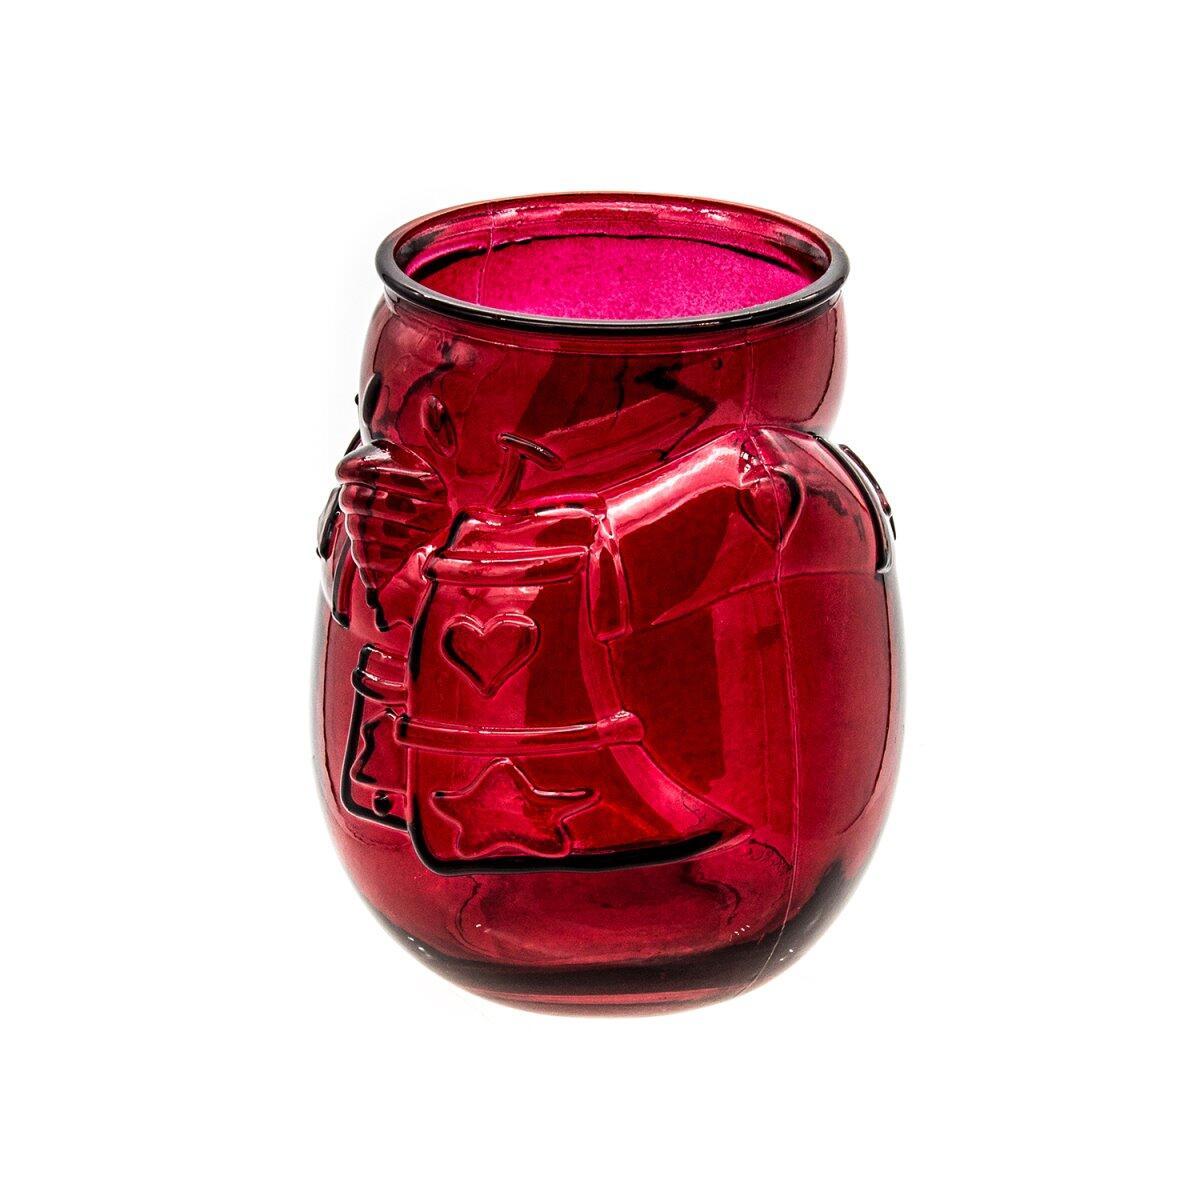 Sanmiguel Muneco Glass